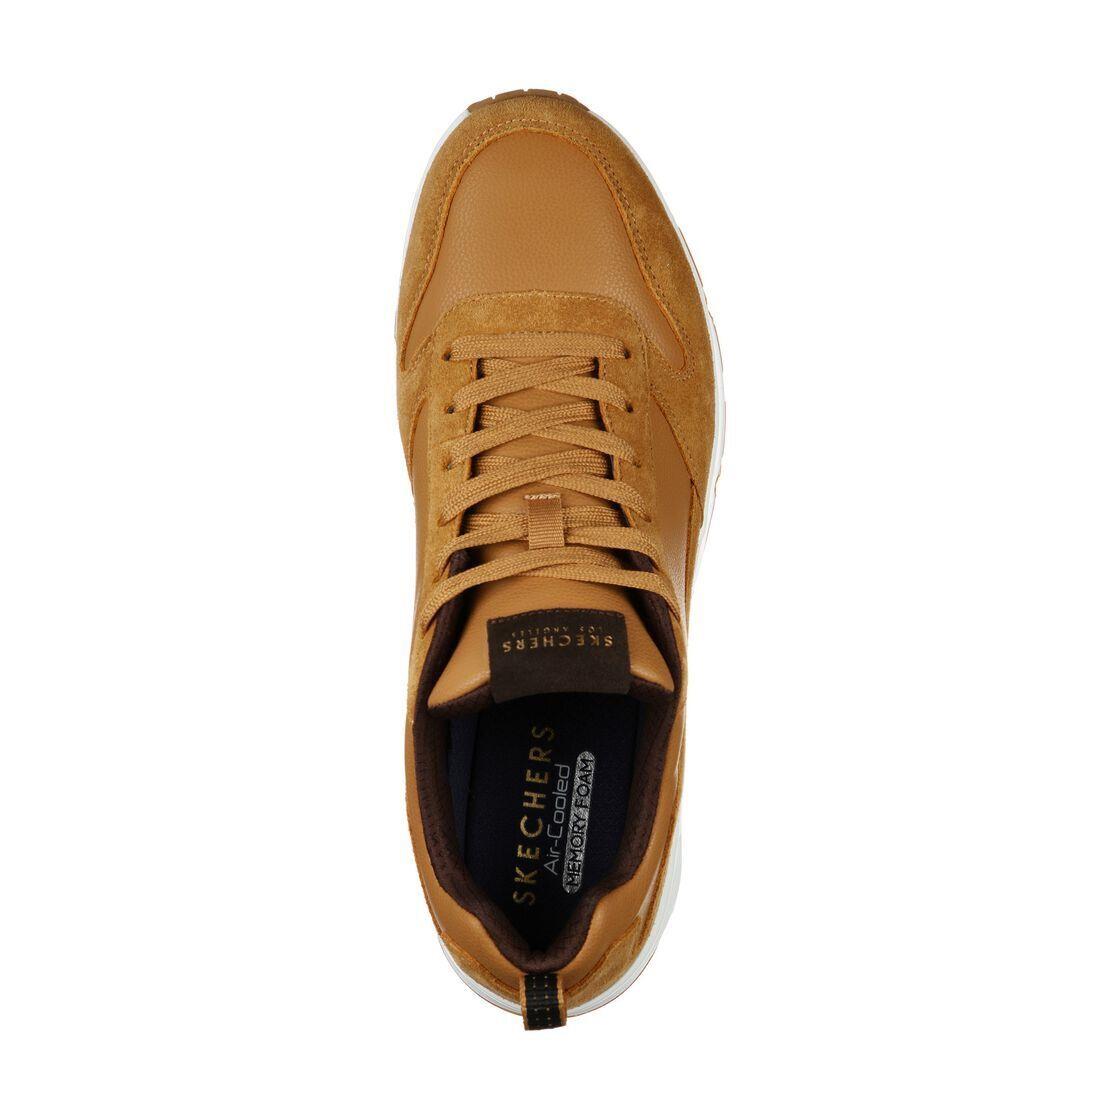 Skechers shoes Uno Stacre 0